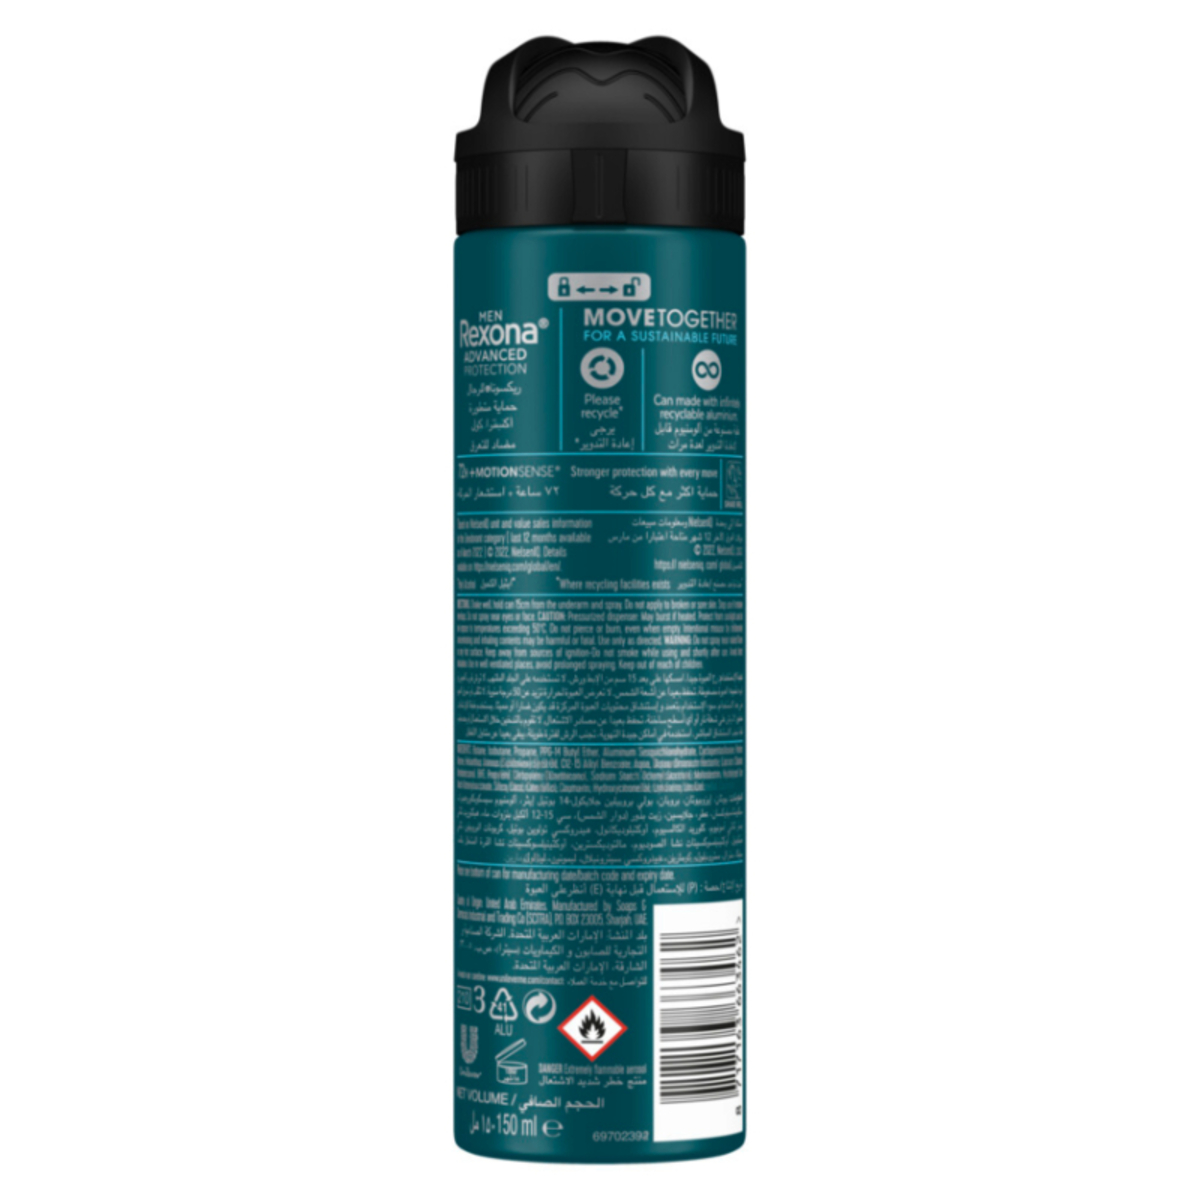 Rexona Advanced Protection 72H Xtra Cool Anti-Perspirant Deodorant Spray for Men 2 x 150 ml